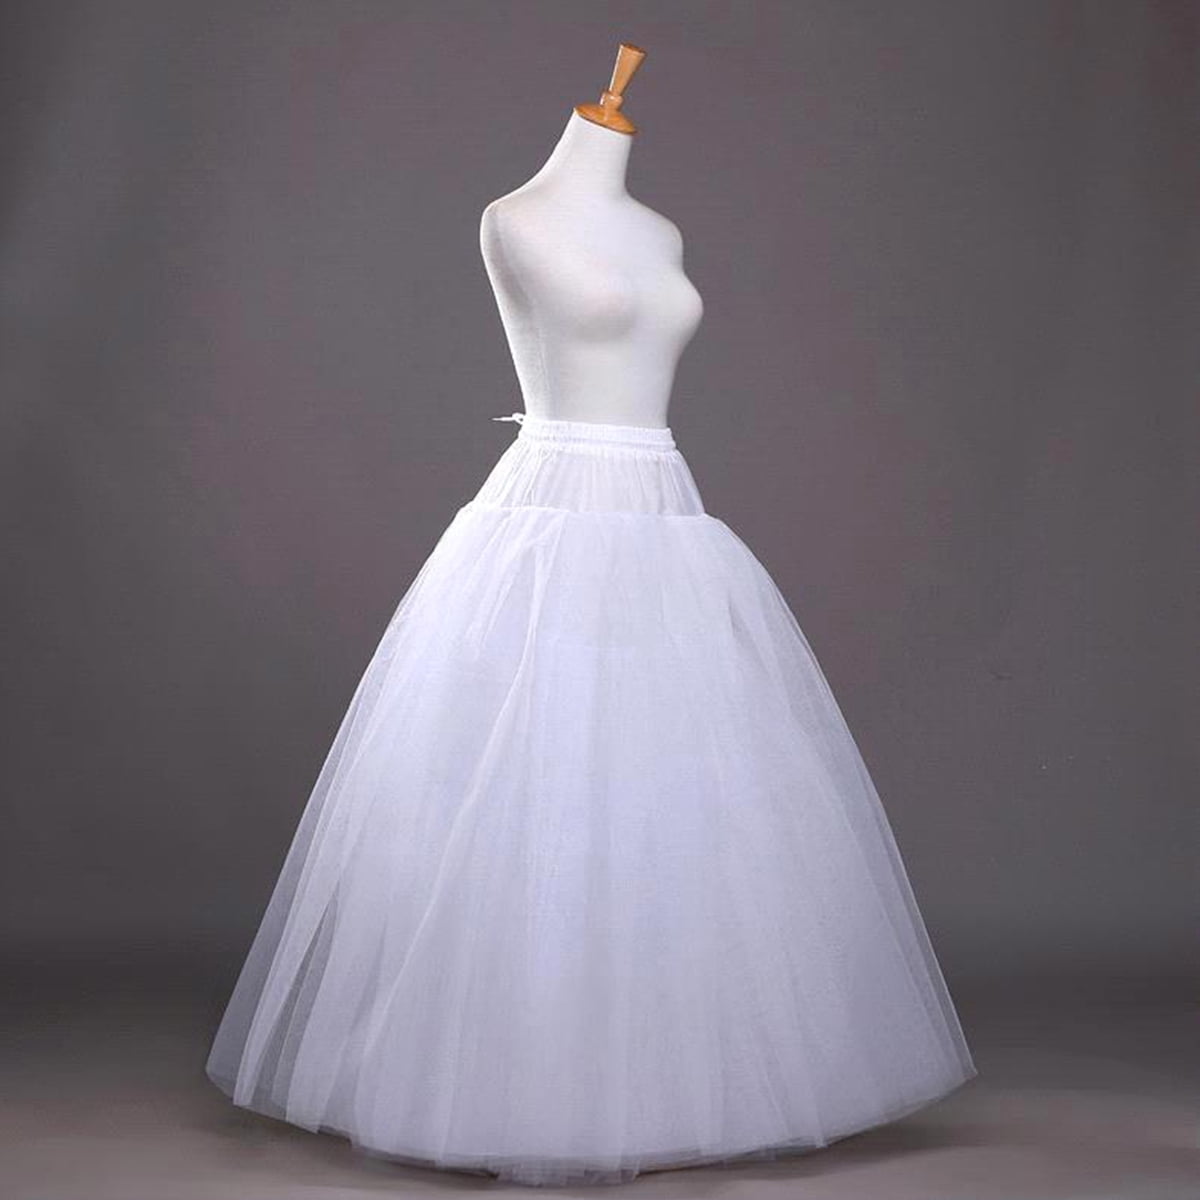 3 Hoops 2 Layer Bridal Wedding A-Line Underskirt Petticoat Skirt White Crinoline 